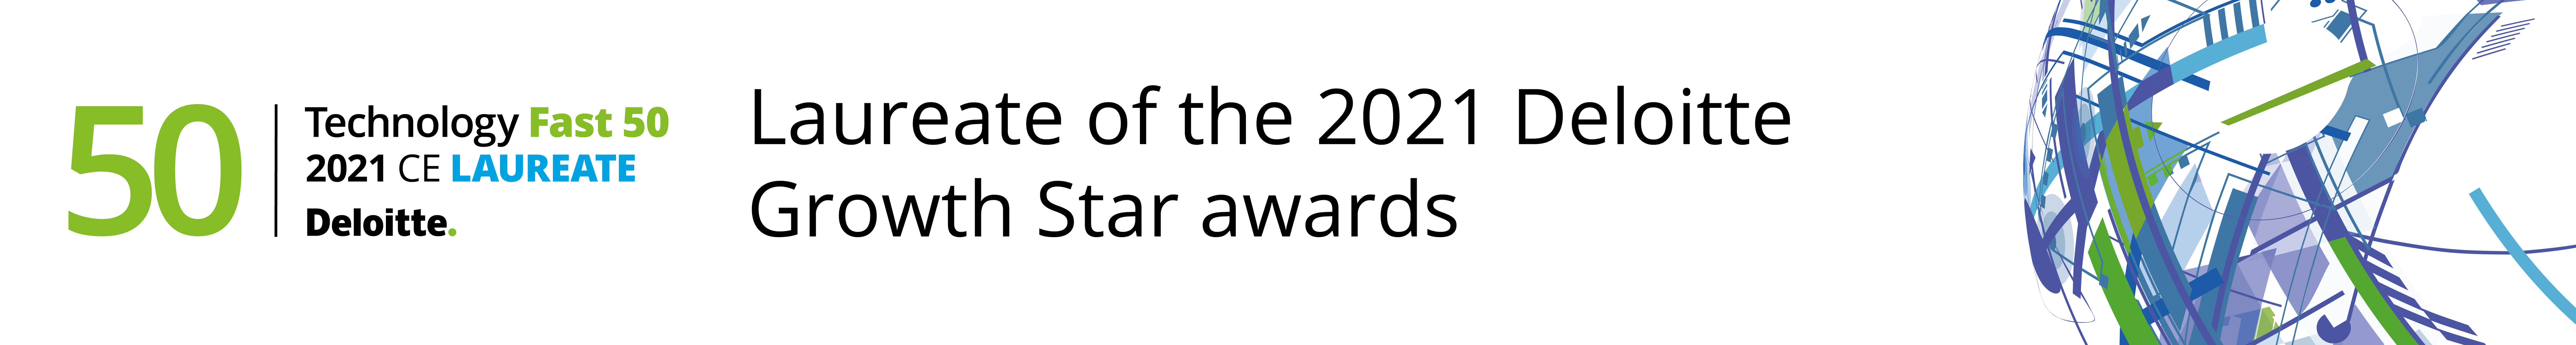 Laureate of the 2021 Deloitte Growth Star award white